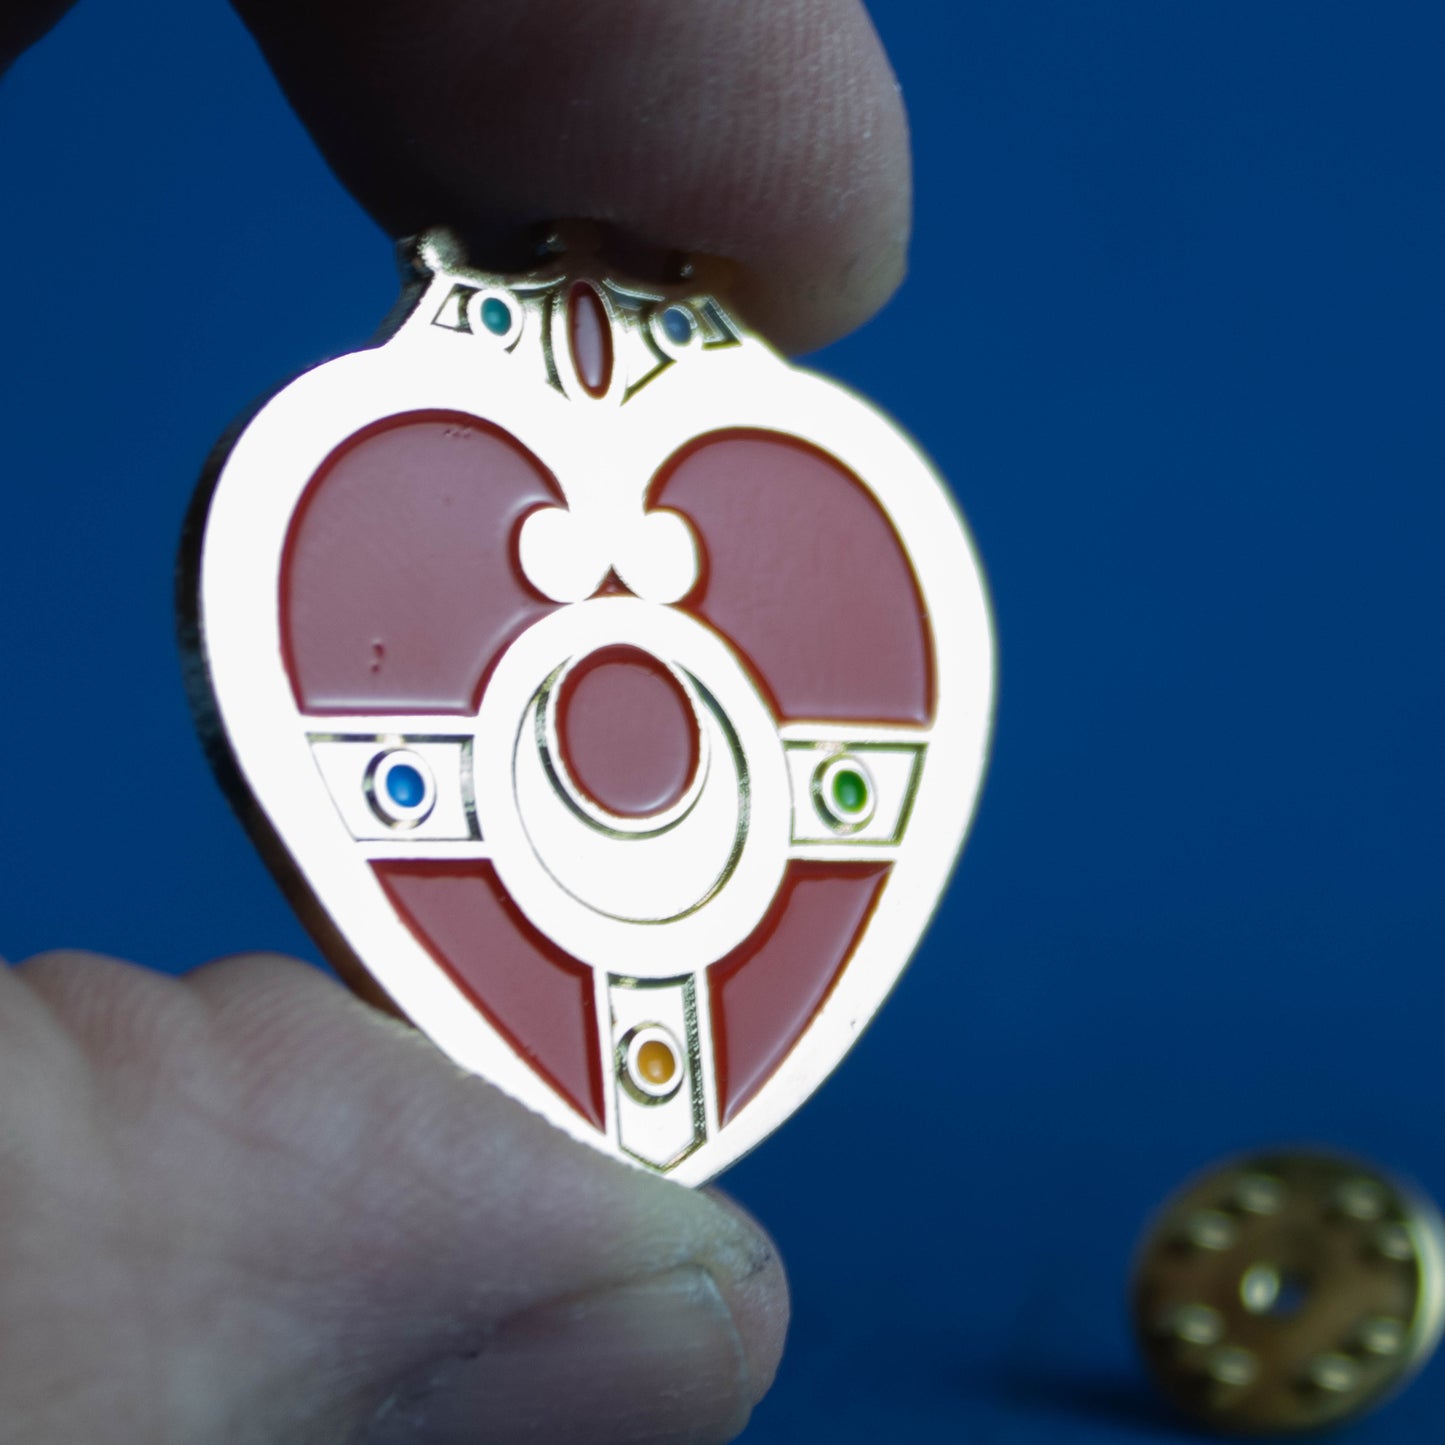 Cosmic Heart Compact Sailor Moon Enamel Pin